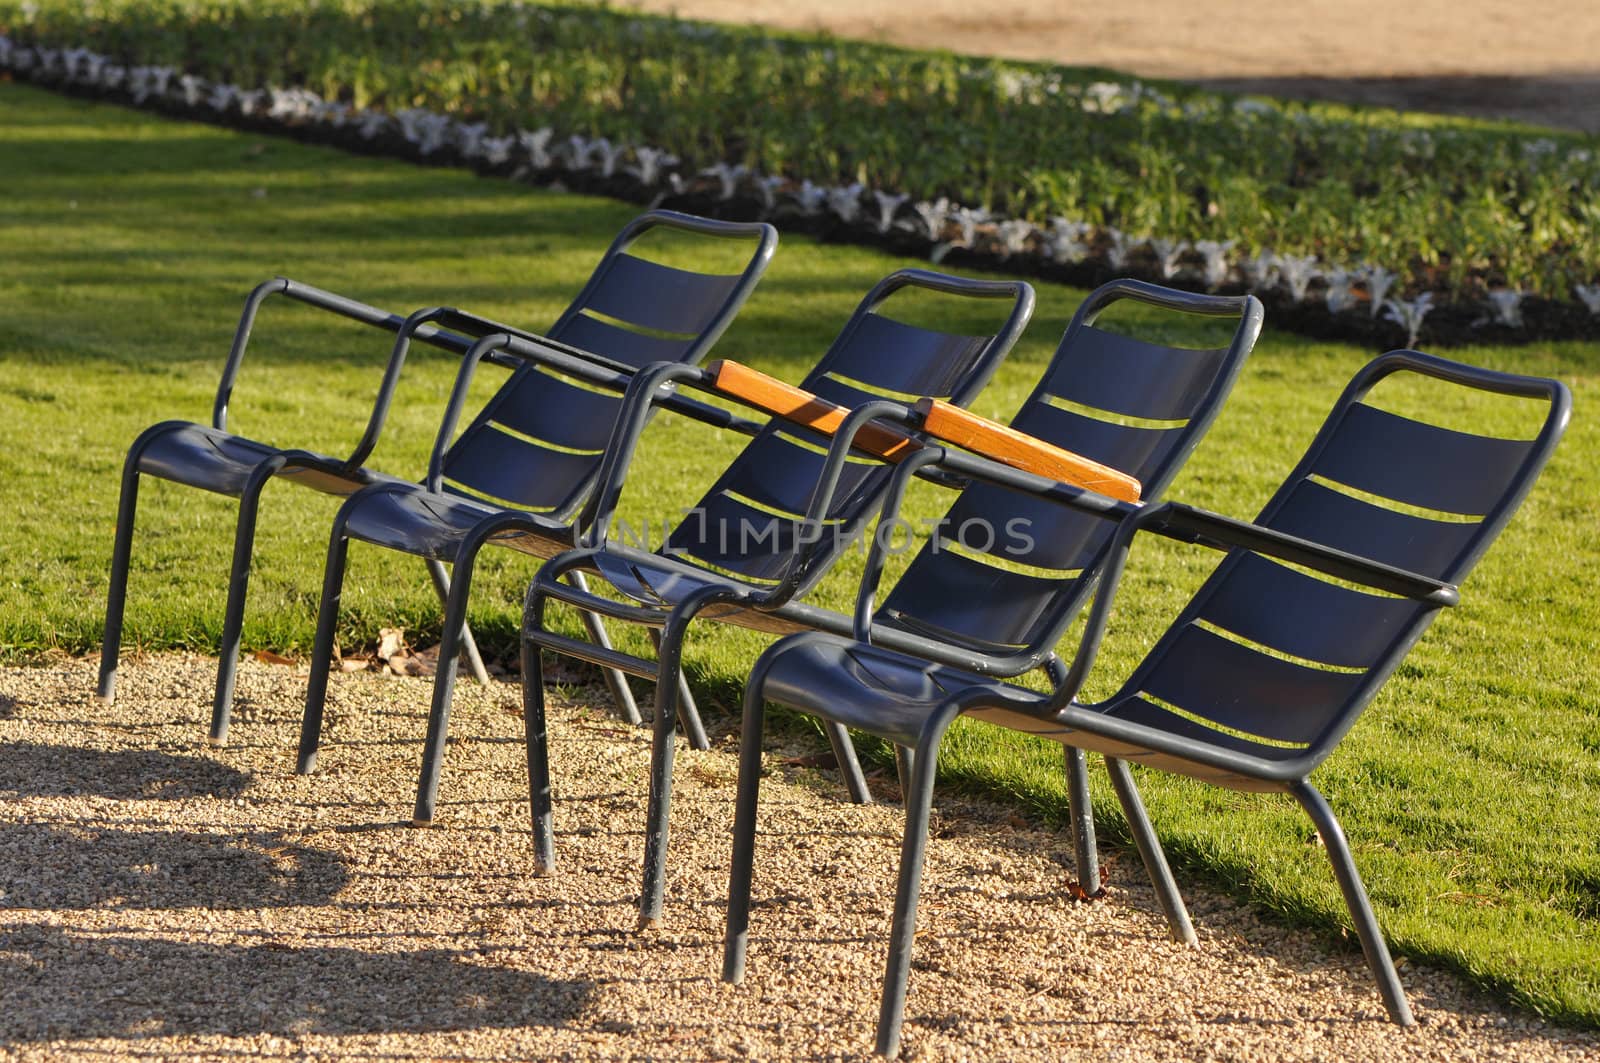 Four metallic chairs in a city garden